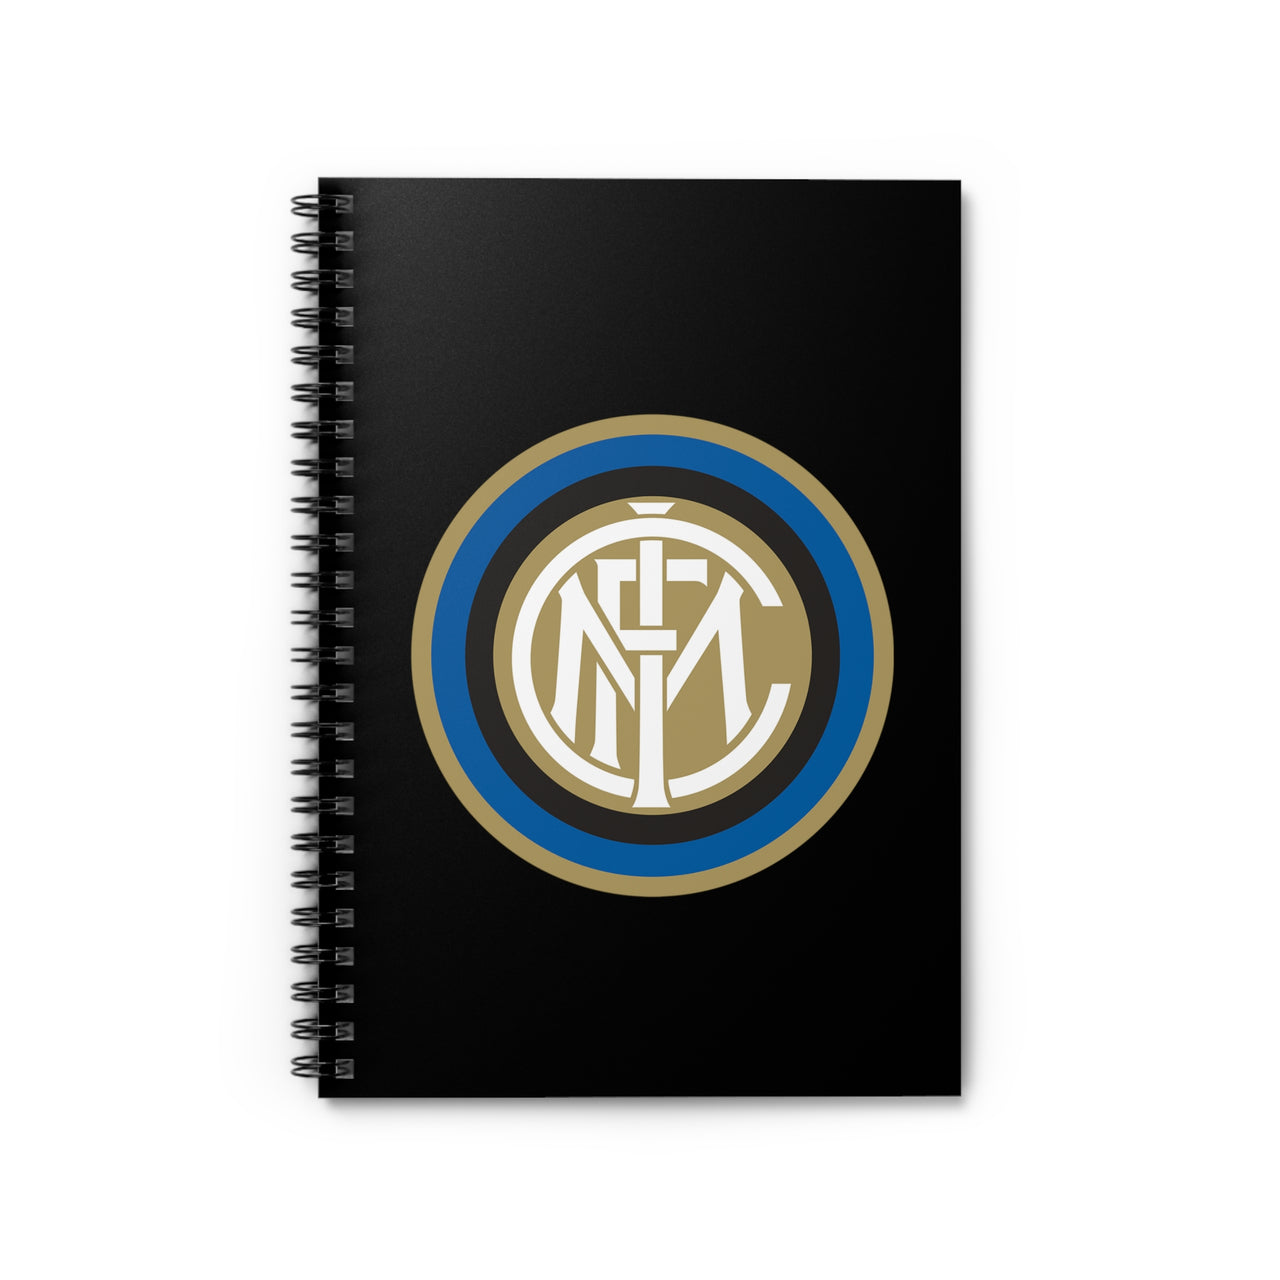 Inter Milan Spiral Notebook - Ruled Line